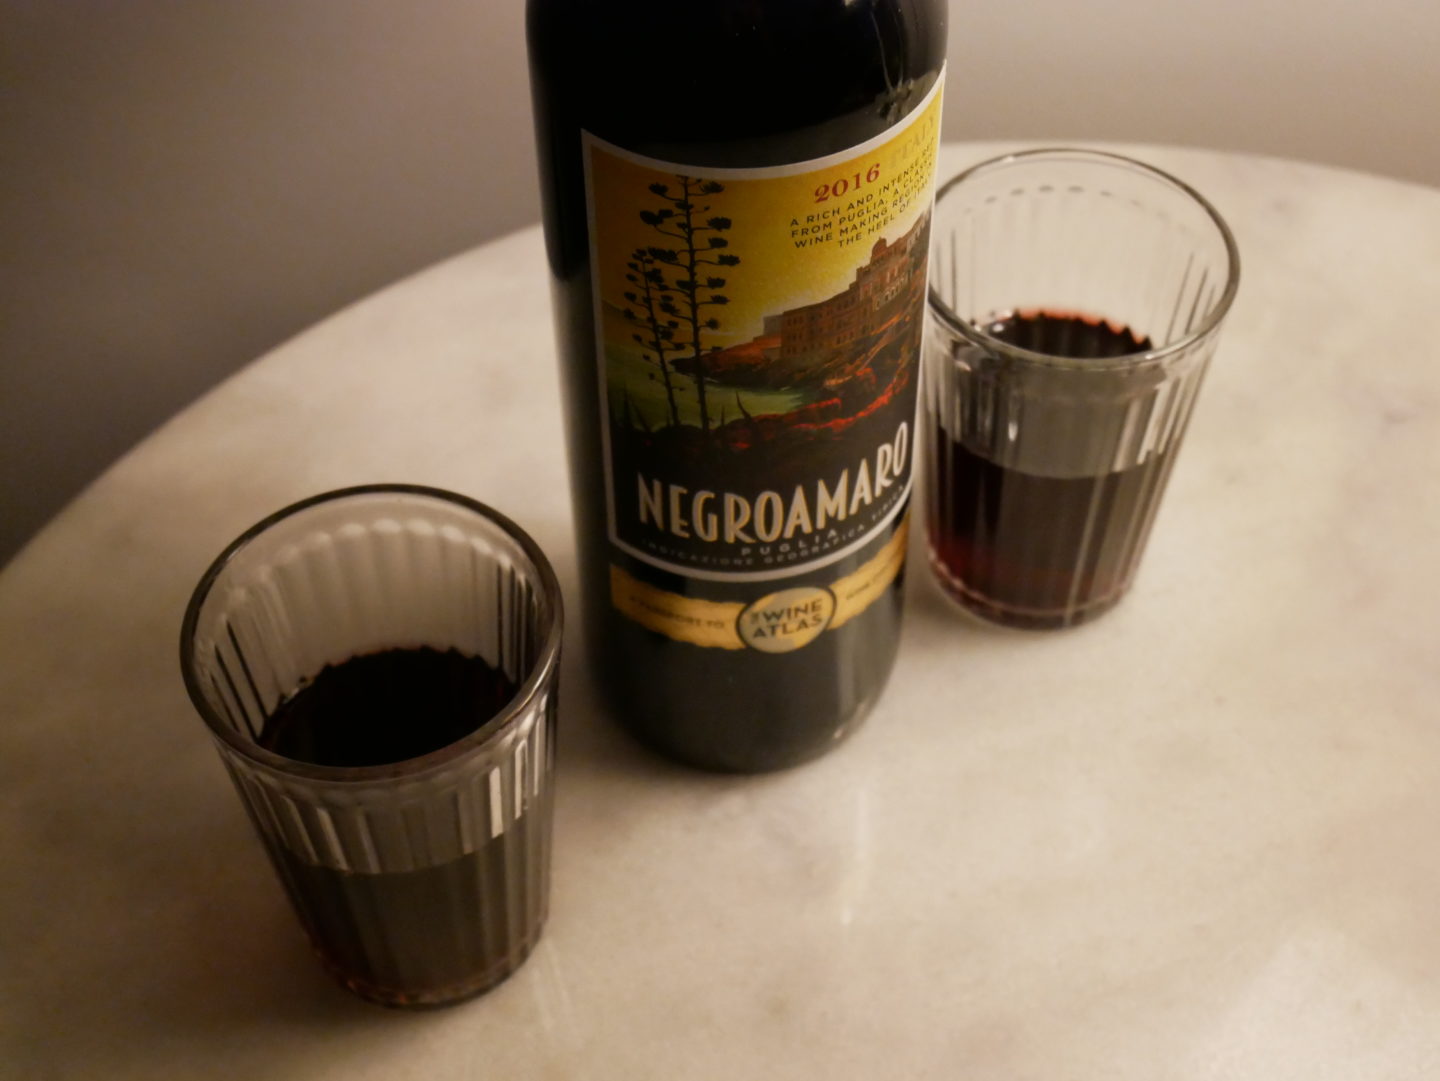 wines for winter with Asda : Negroamaro